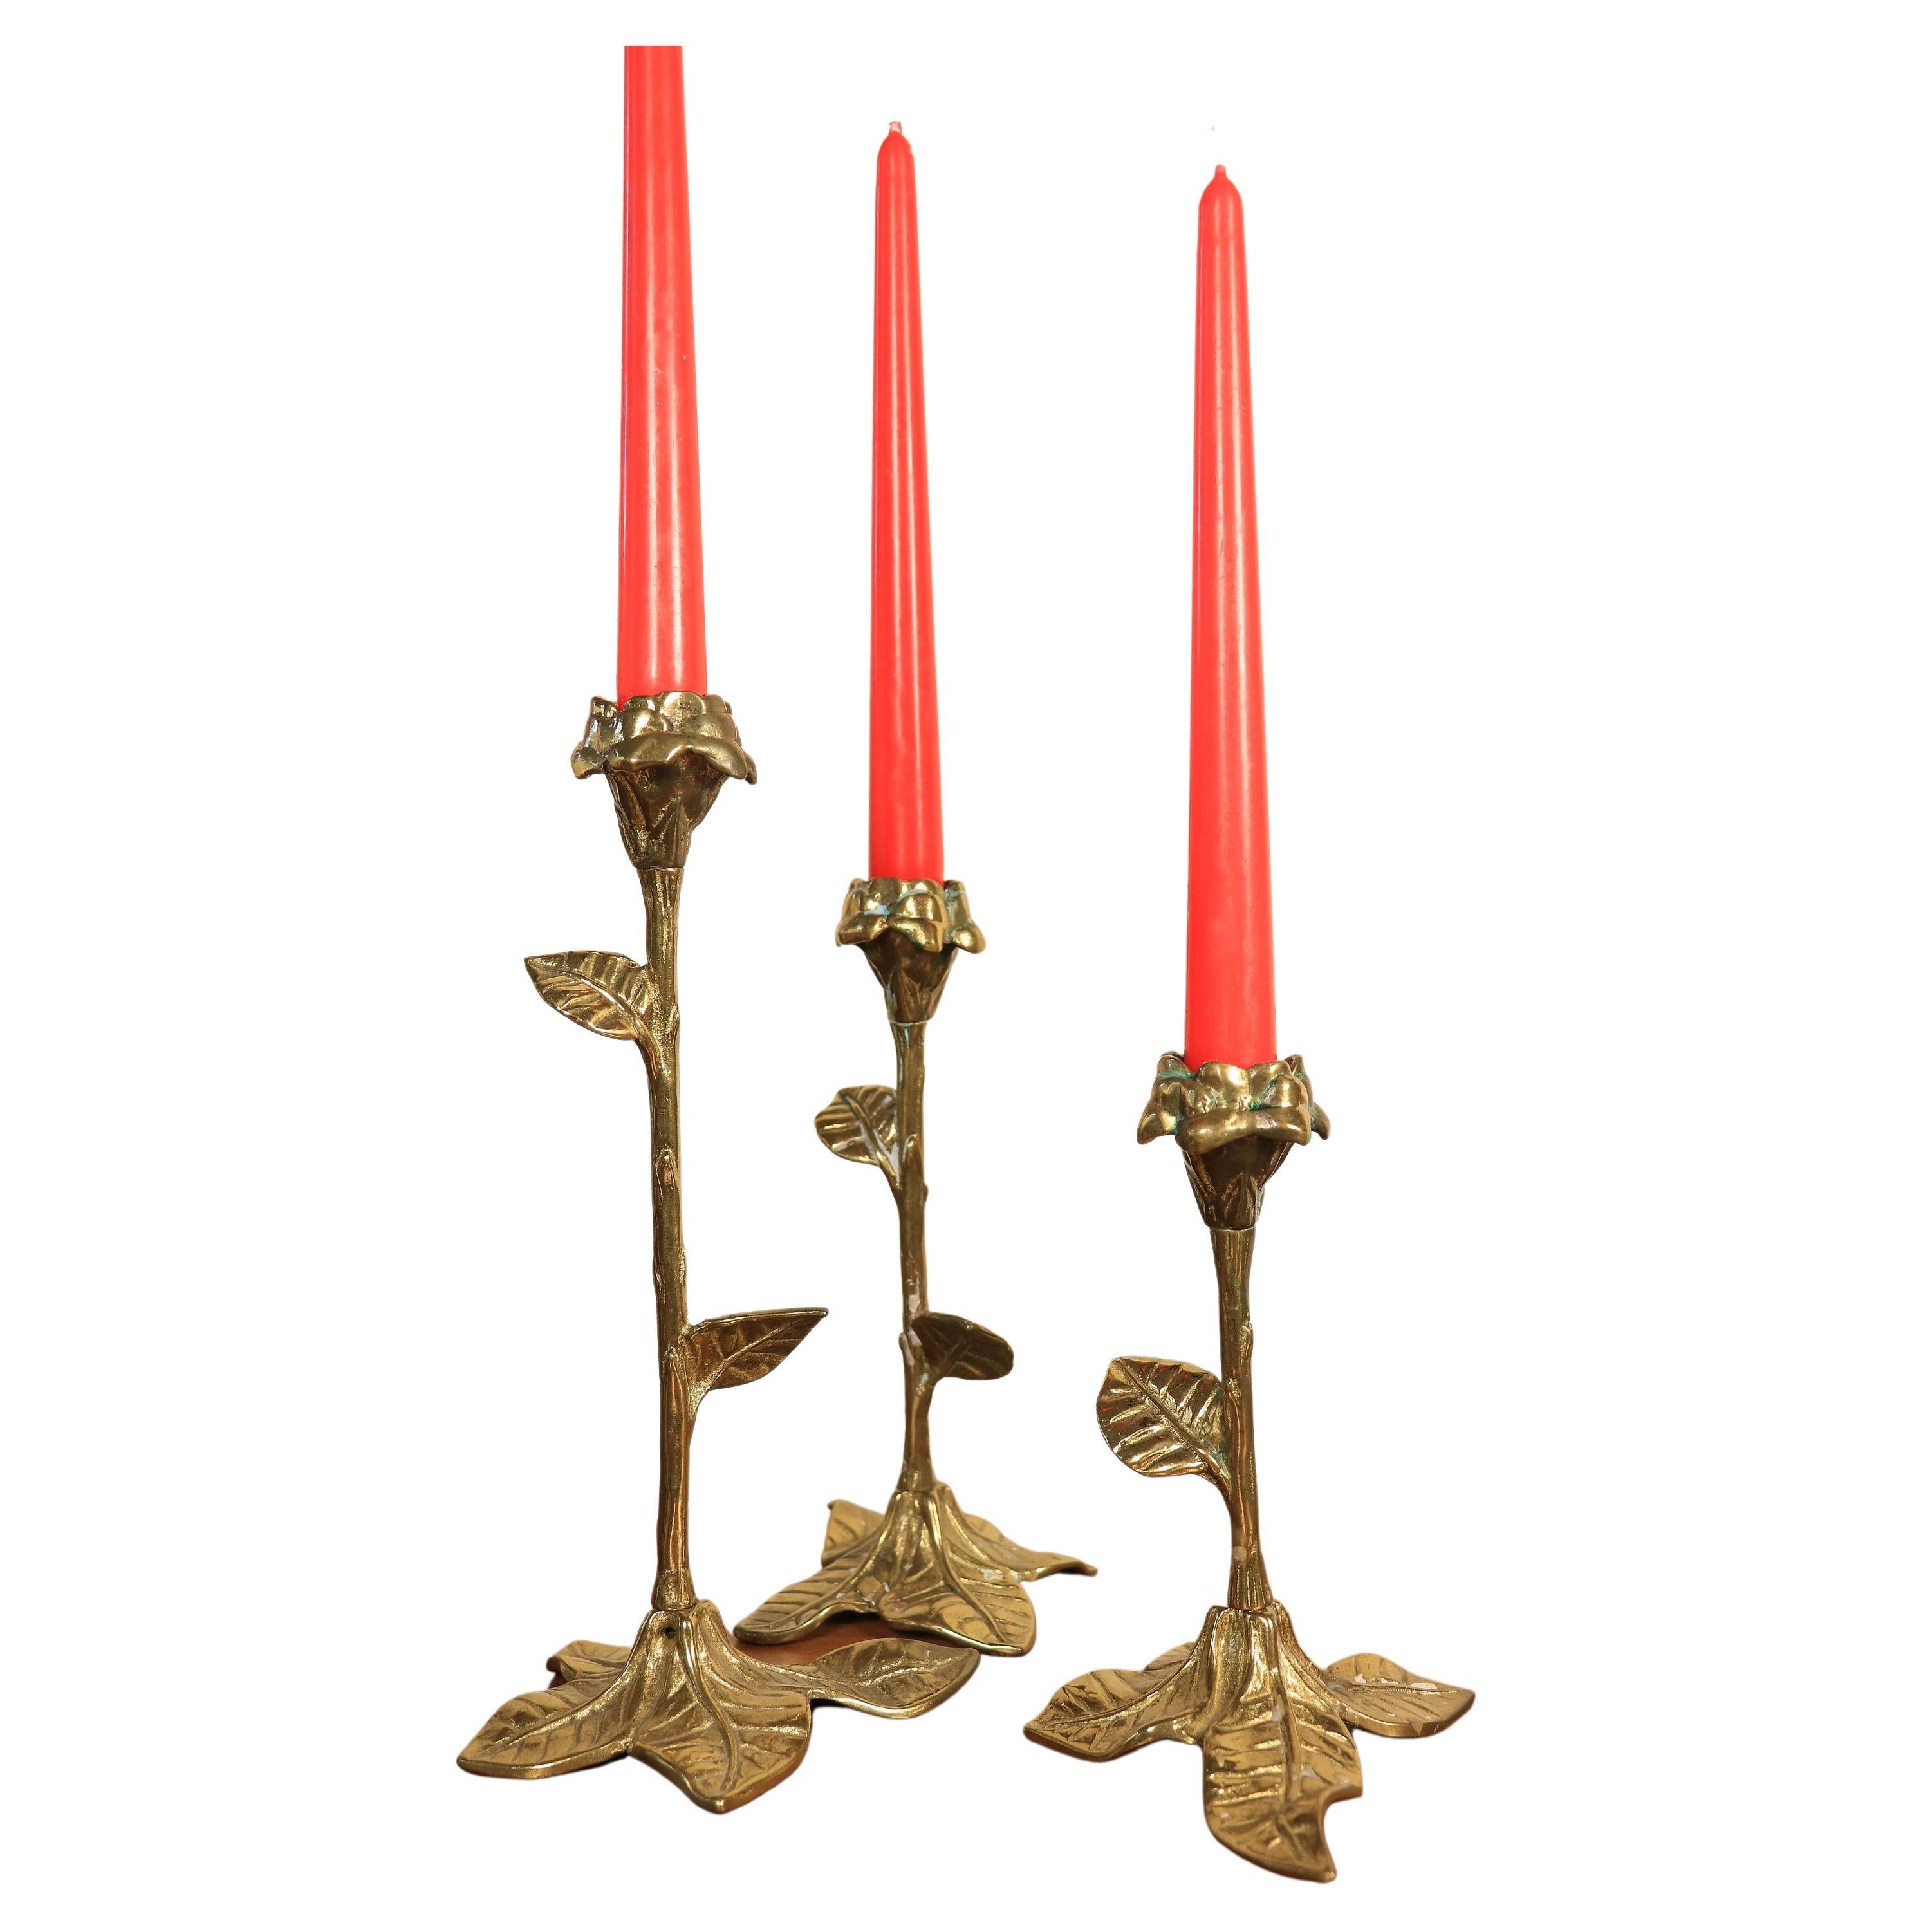 Set of 3 Floral Candlesticks, Hollywood Regency Style, Brass, 1970s For Sale